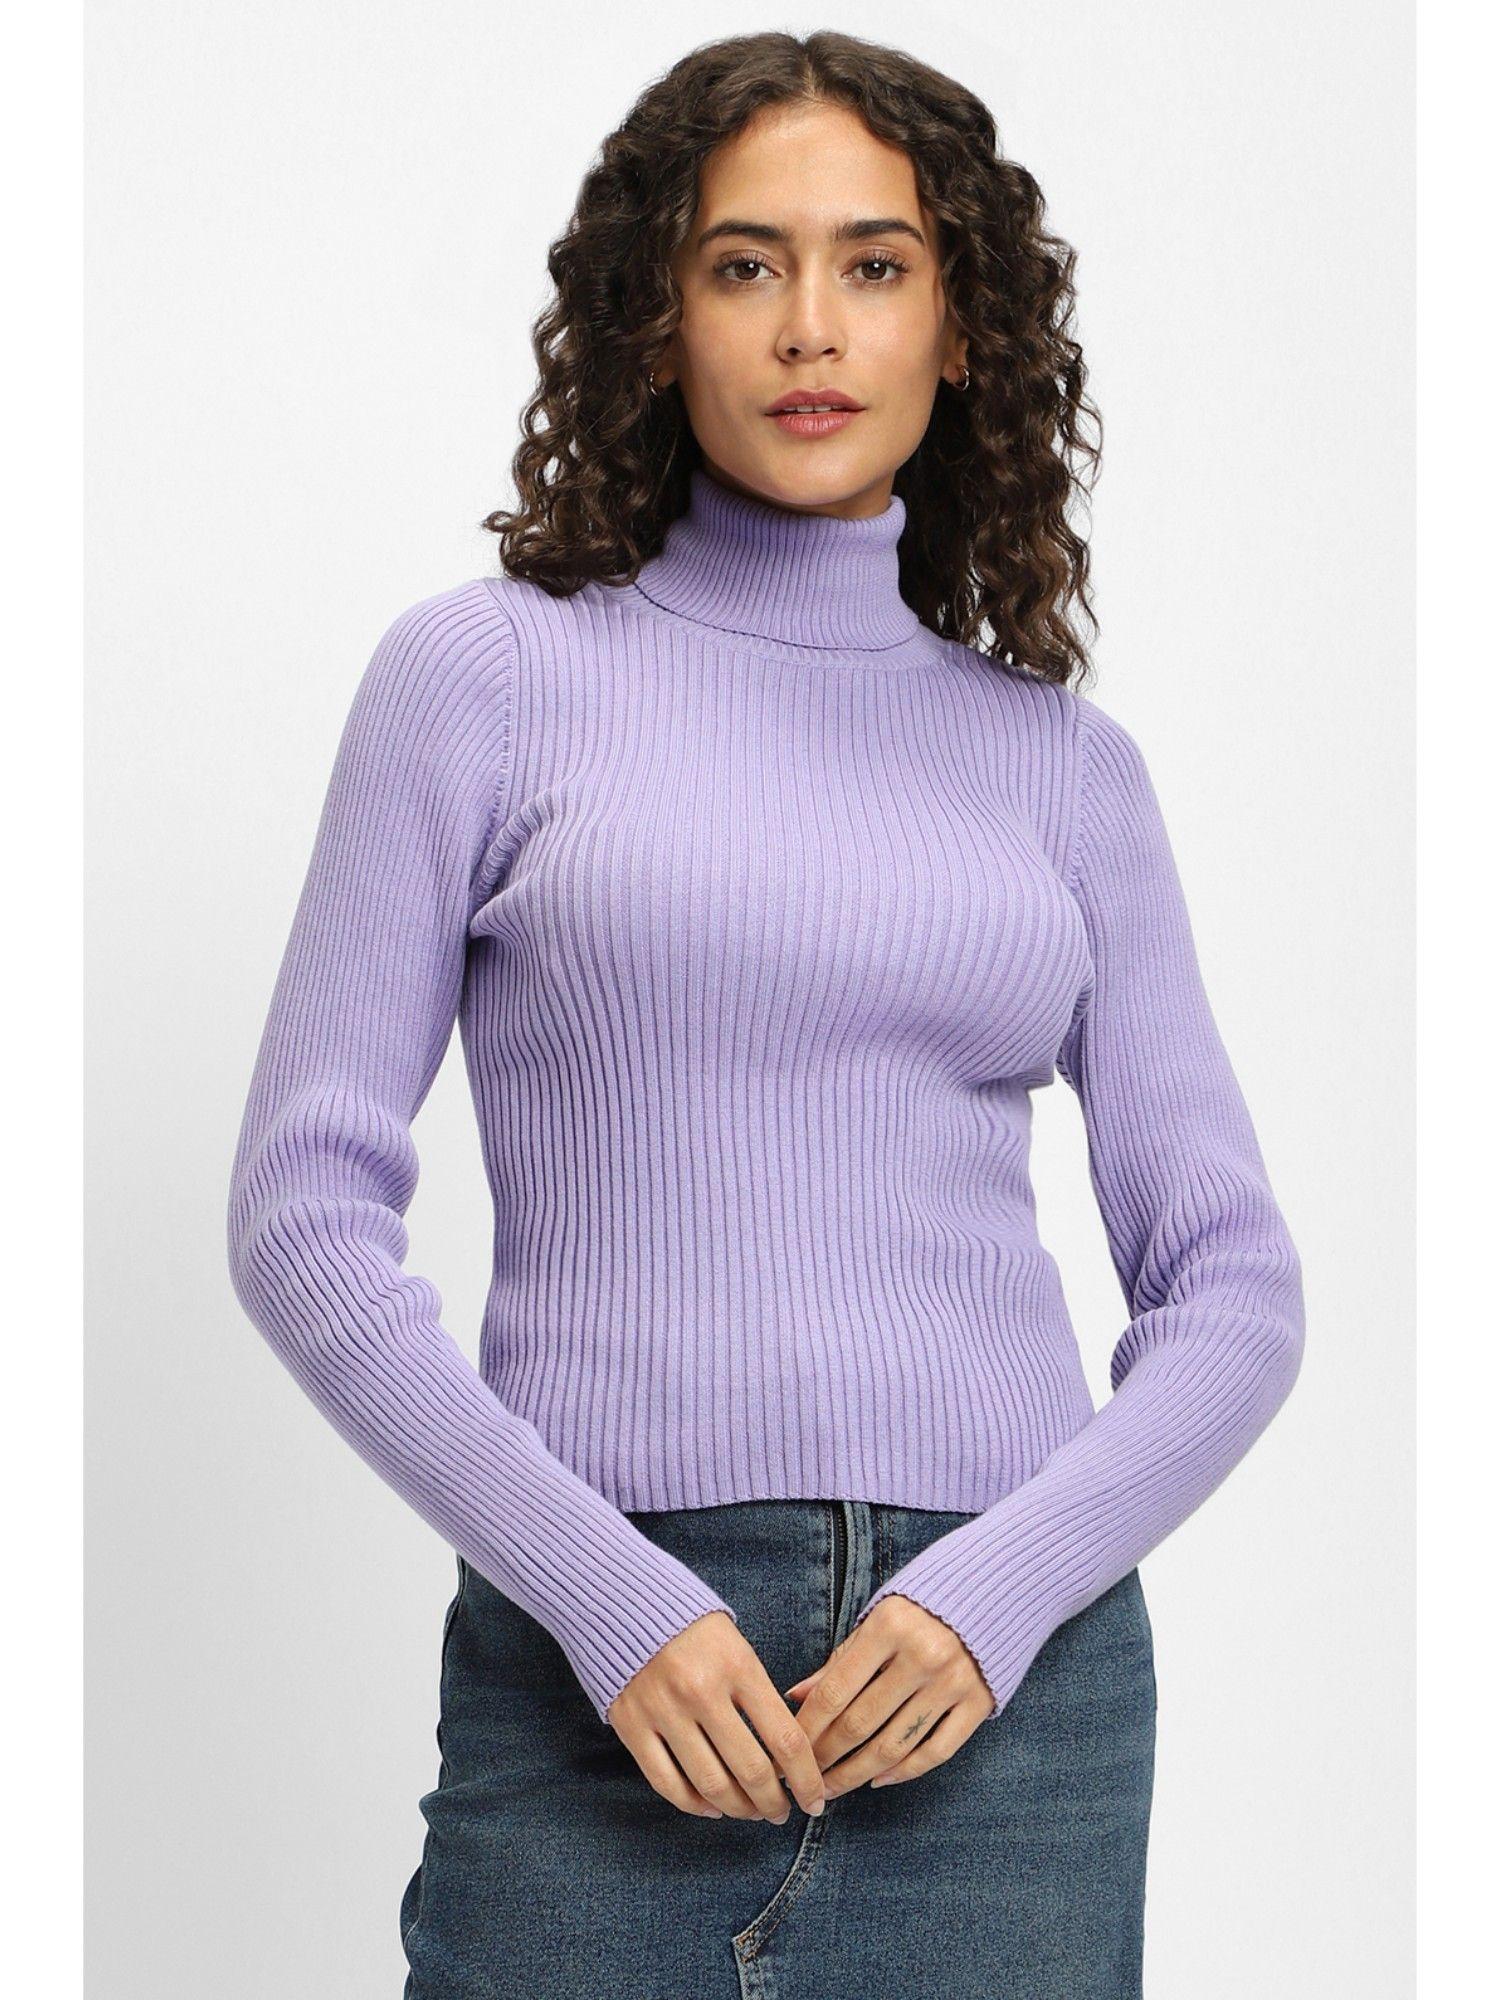 solid purple sweater